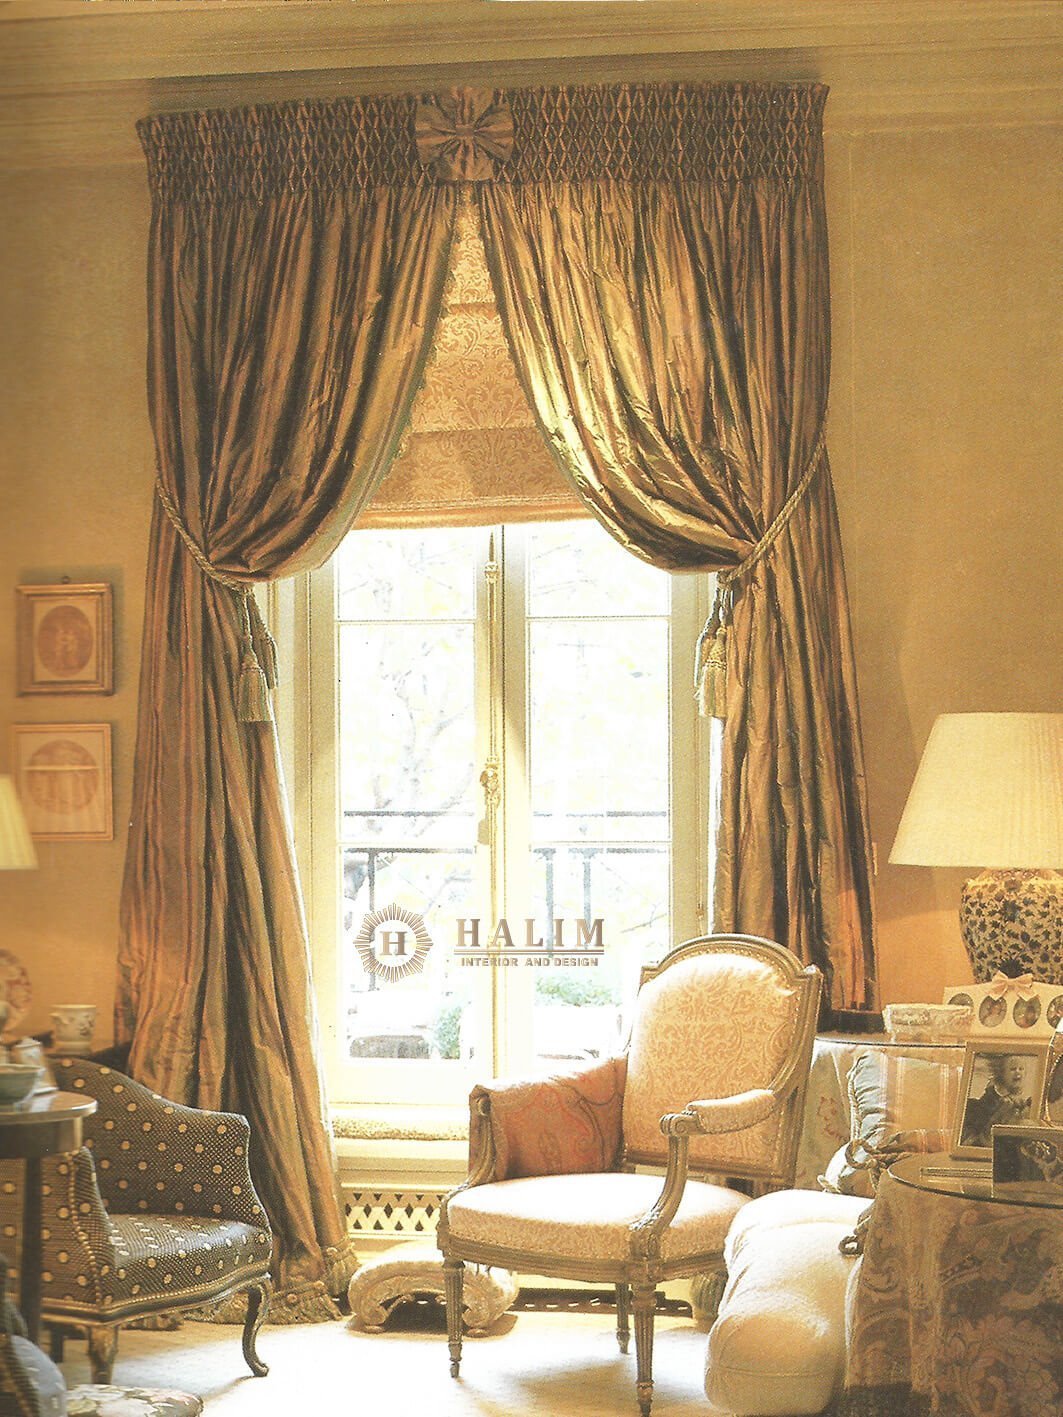 Halim Interior modern furniture contemporer american style minimalist european classic surabaya Curtain new 1